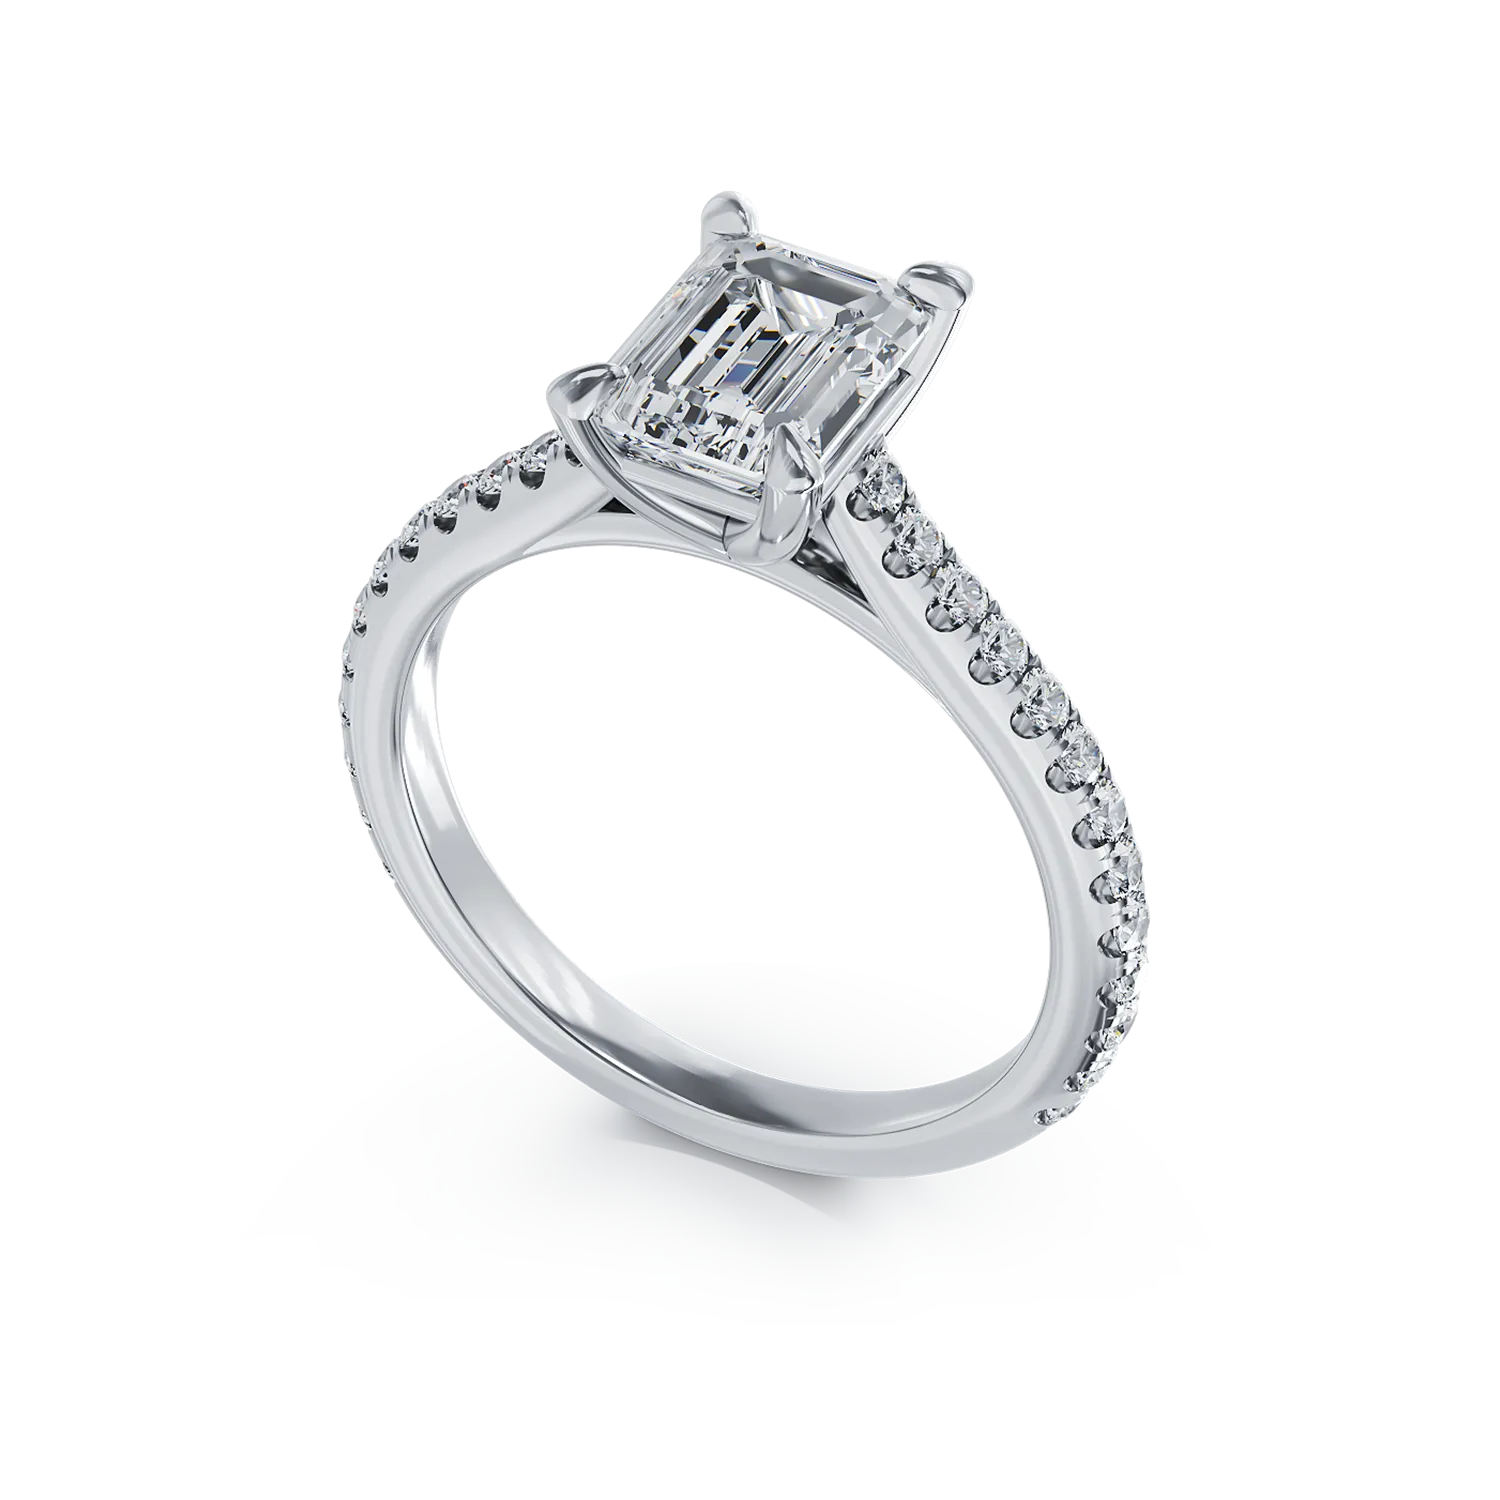 Diamond platinum engagement ring with 1.5ct diamond and 0.33ct diamonds